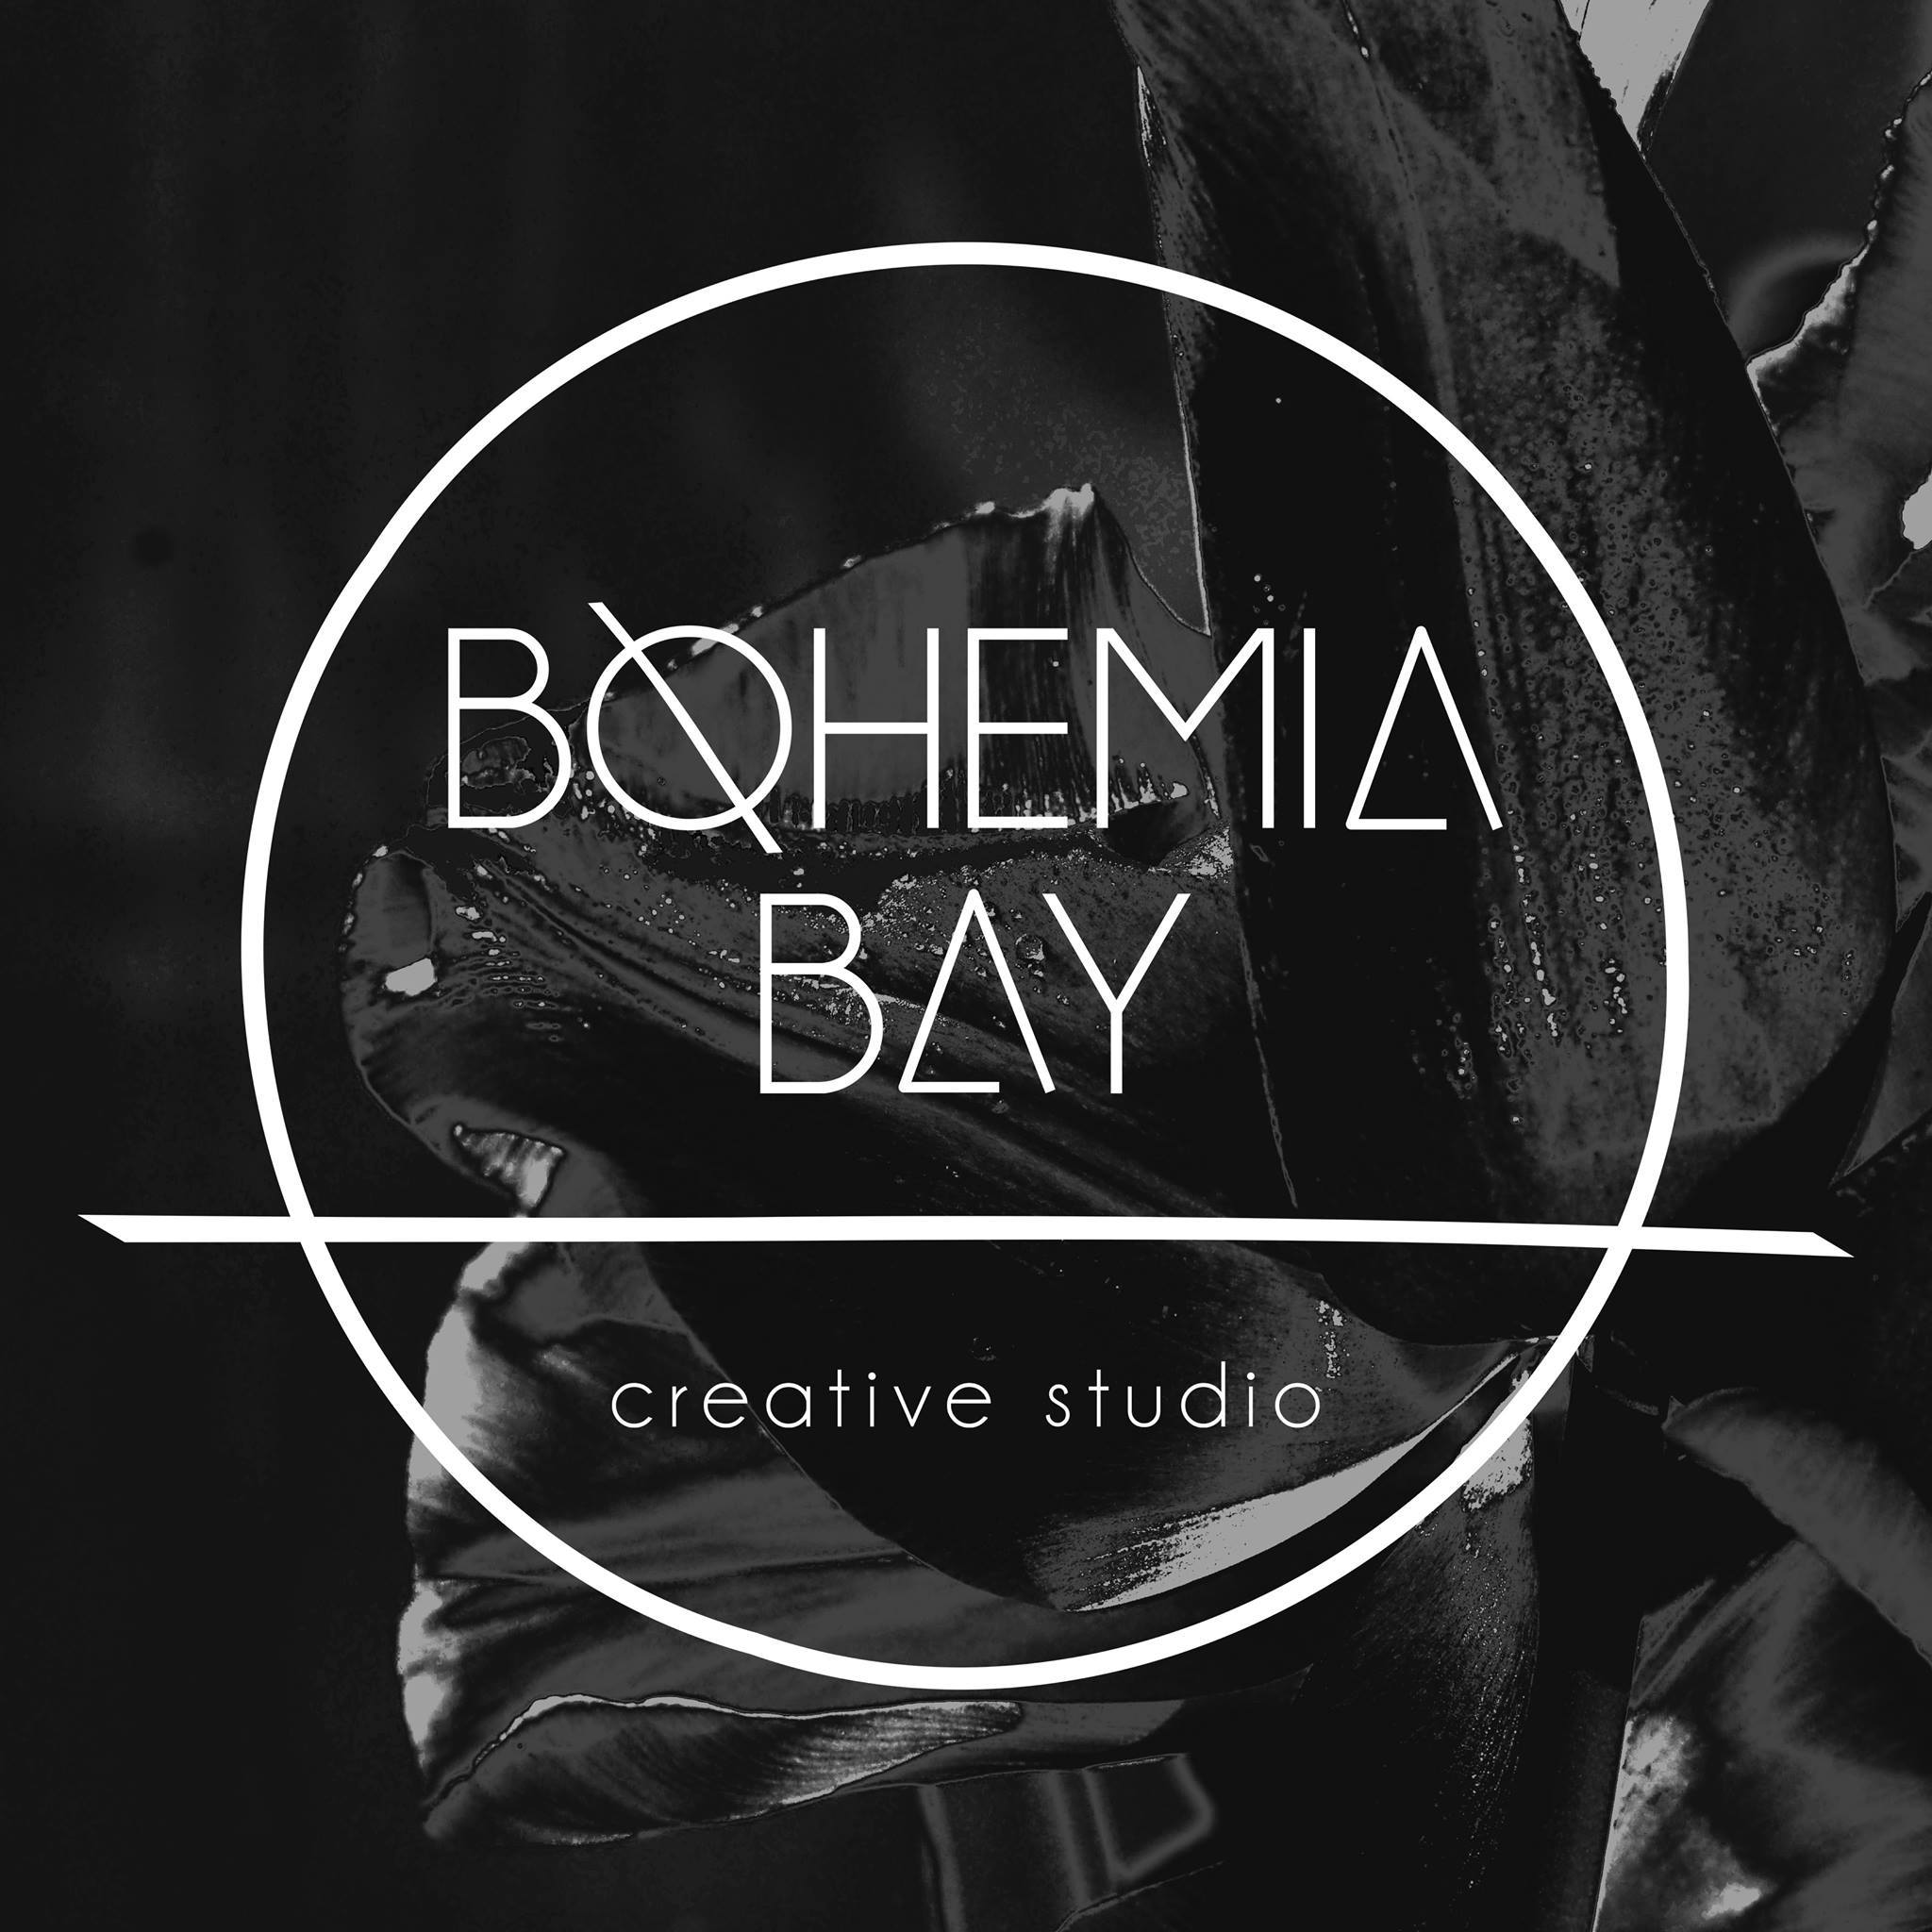 Bohemia Bay Studio